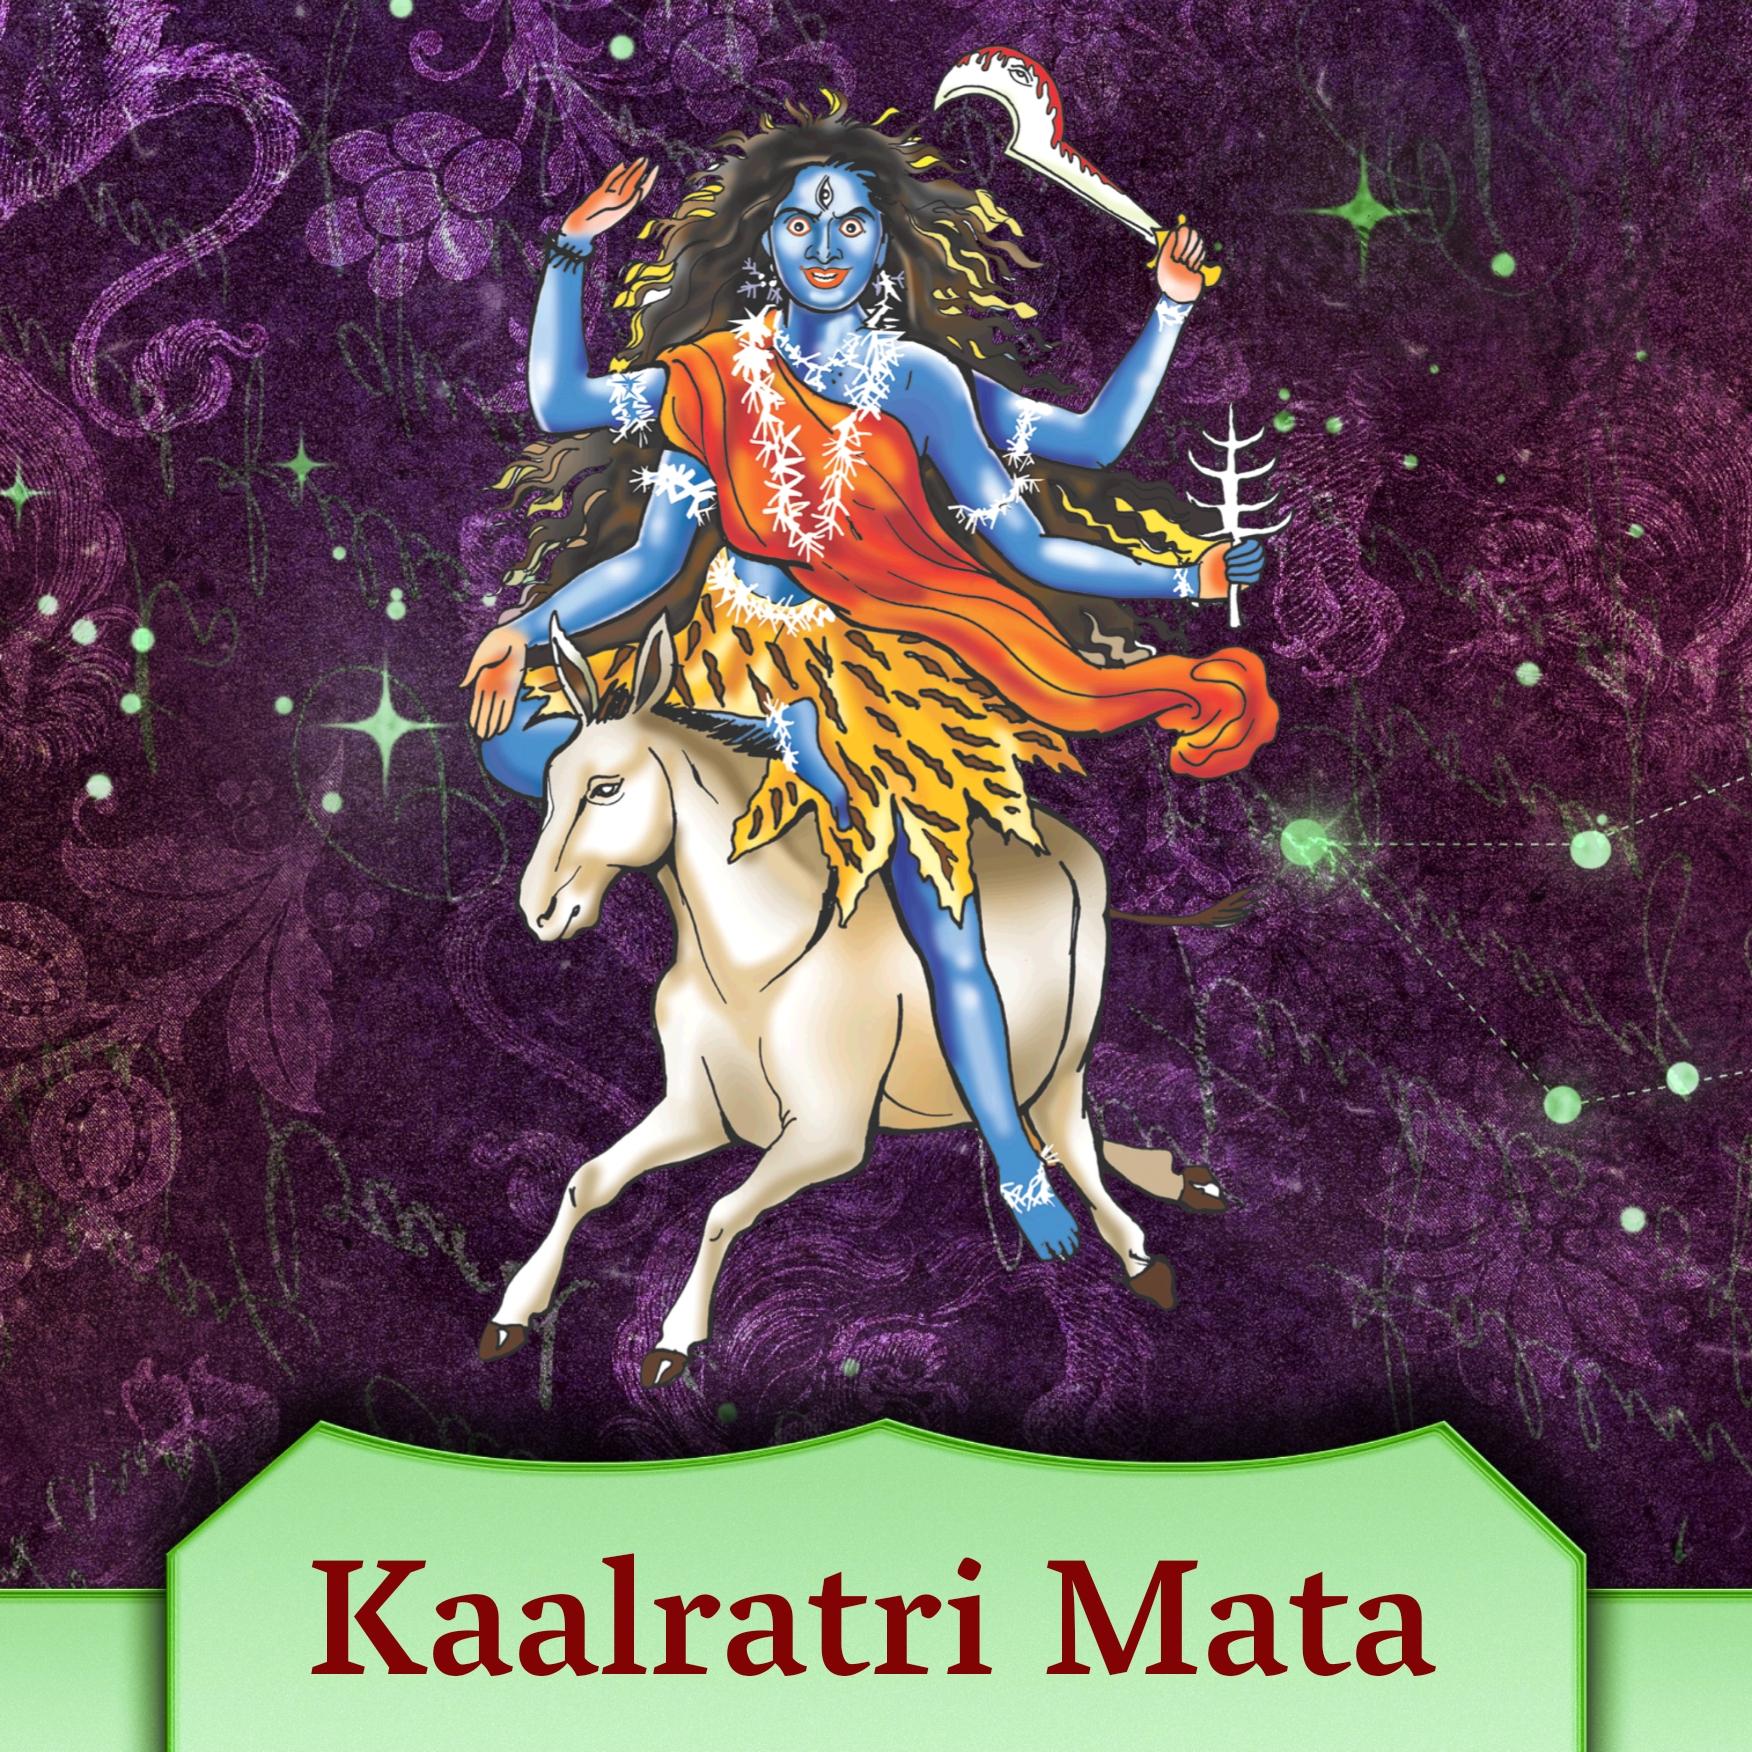 Kaalratri Mata Images